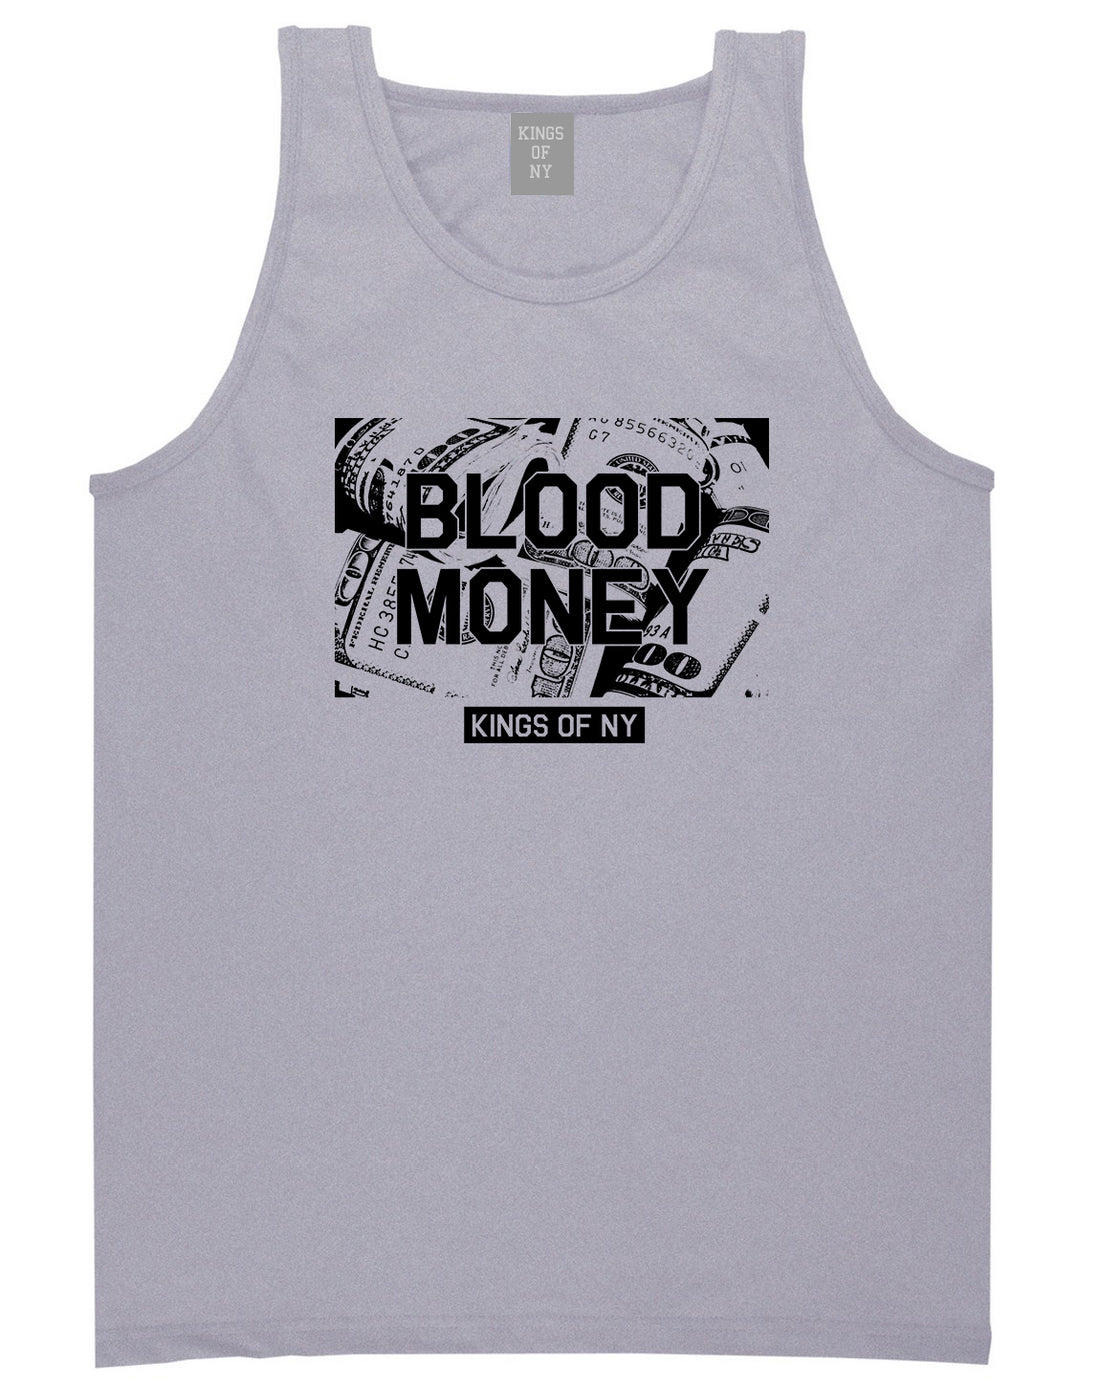 Blood Money 100s Mens Tank Top Shirt Grey